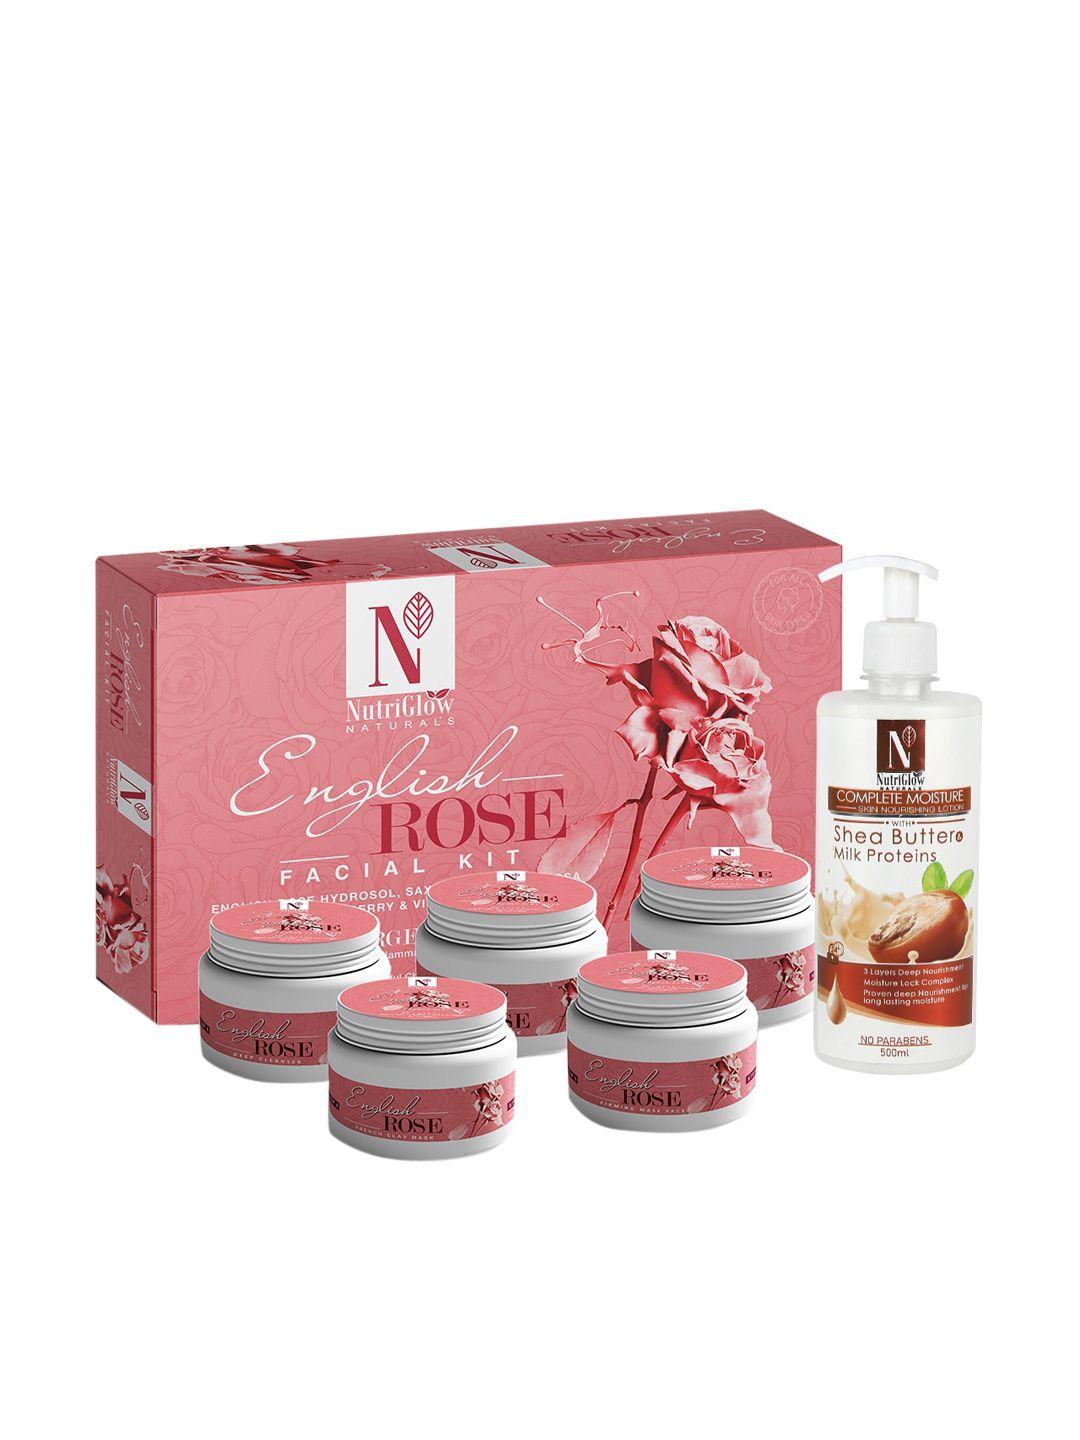 nutriglow-naturals-english-rose-facial-kit-250g+10ml-&-shea-butter-body-lotion-500ml